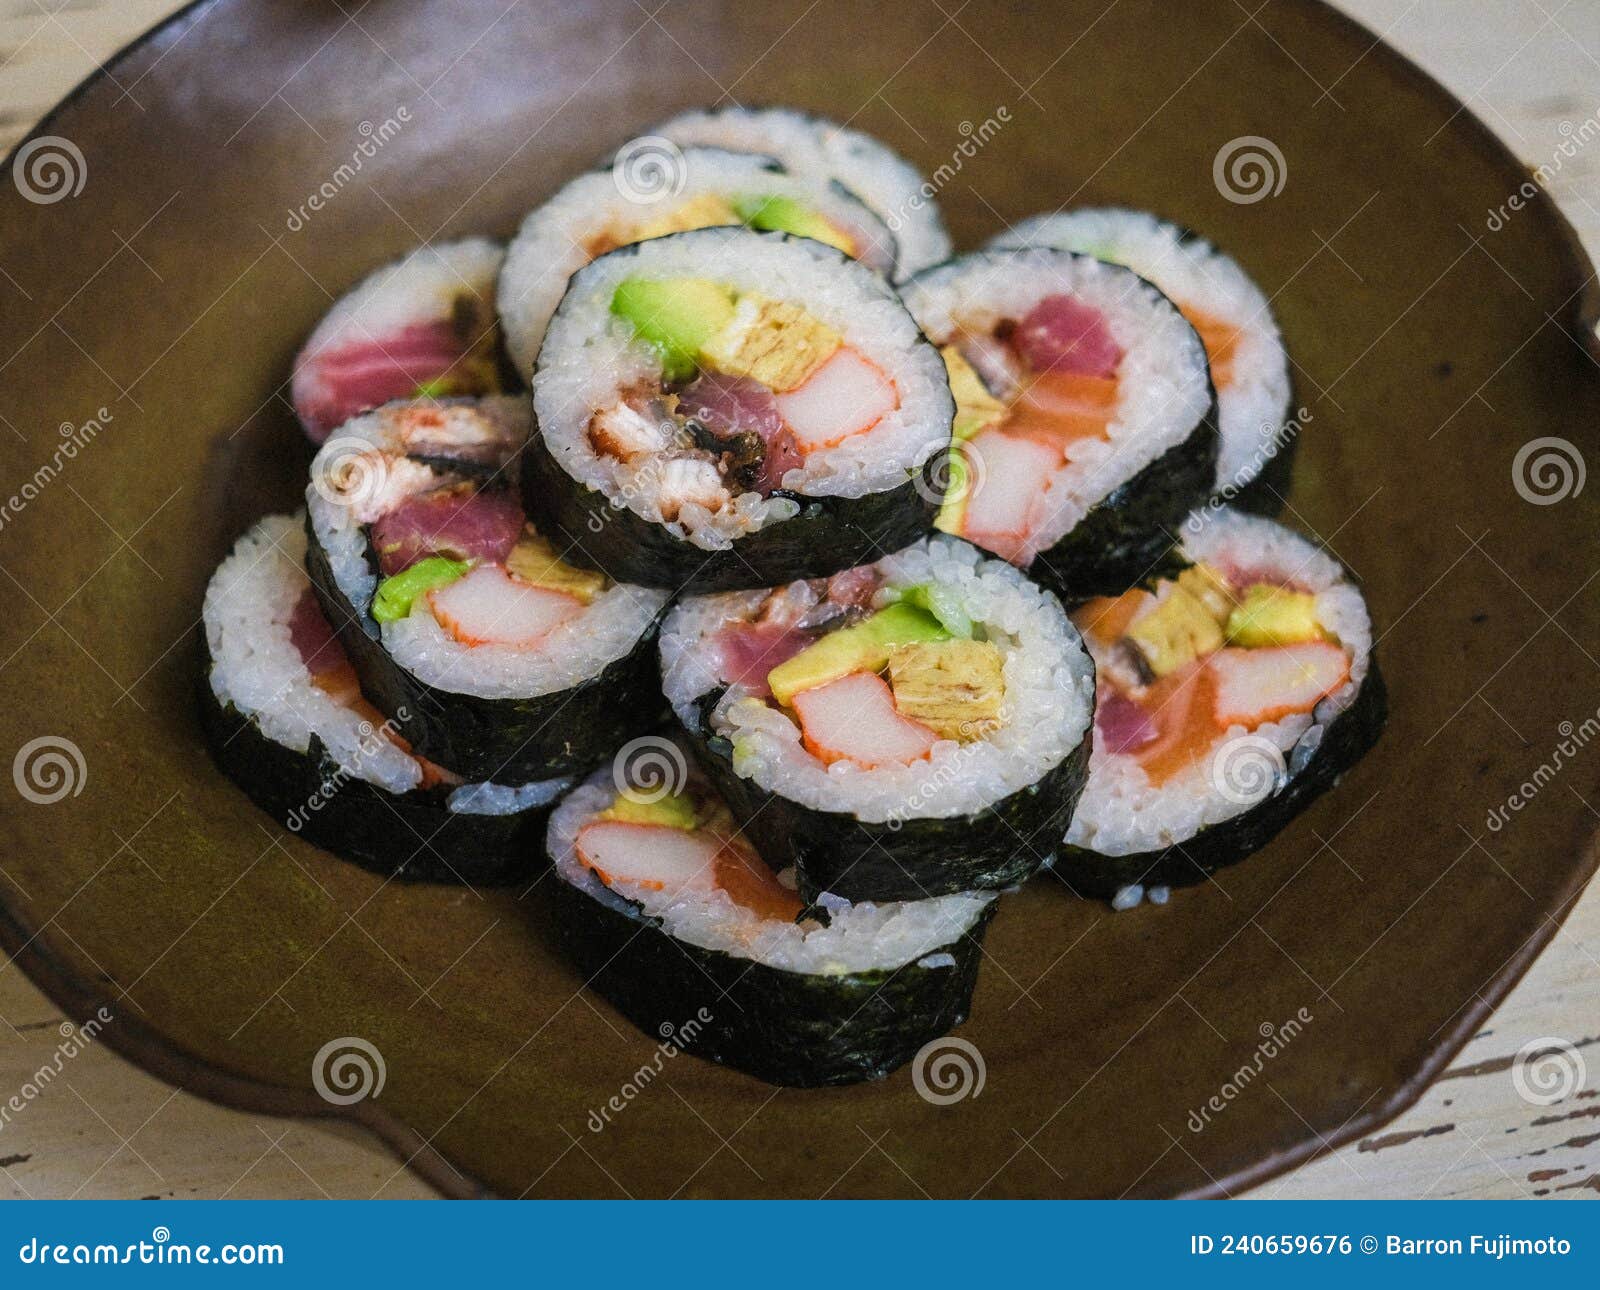 https://thumbs.dreamstime.com/z/six-large-sushi-rolls-filled-eel-egg-tuna-salmon-avocado-rice-ehoumaki-sushi-rolls-setsubun-240659676.jpg